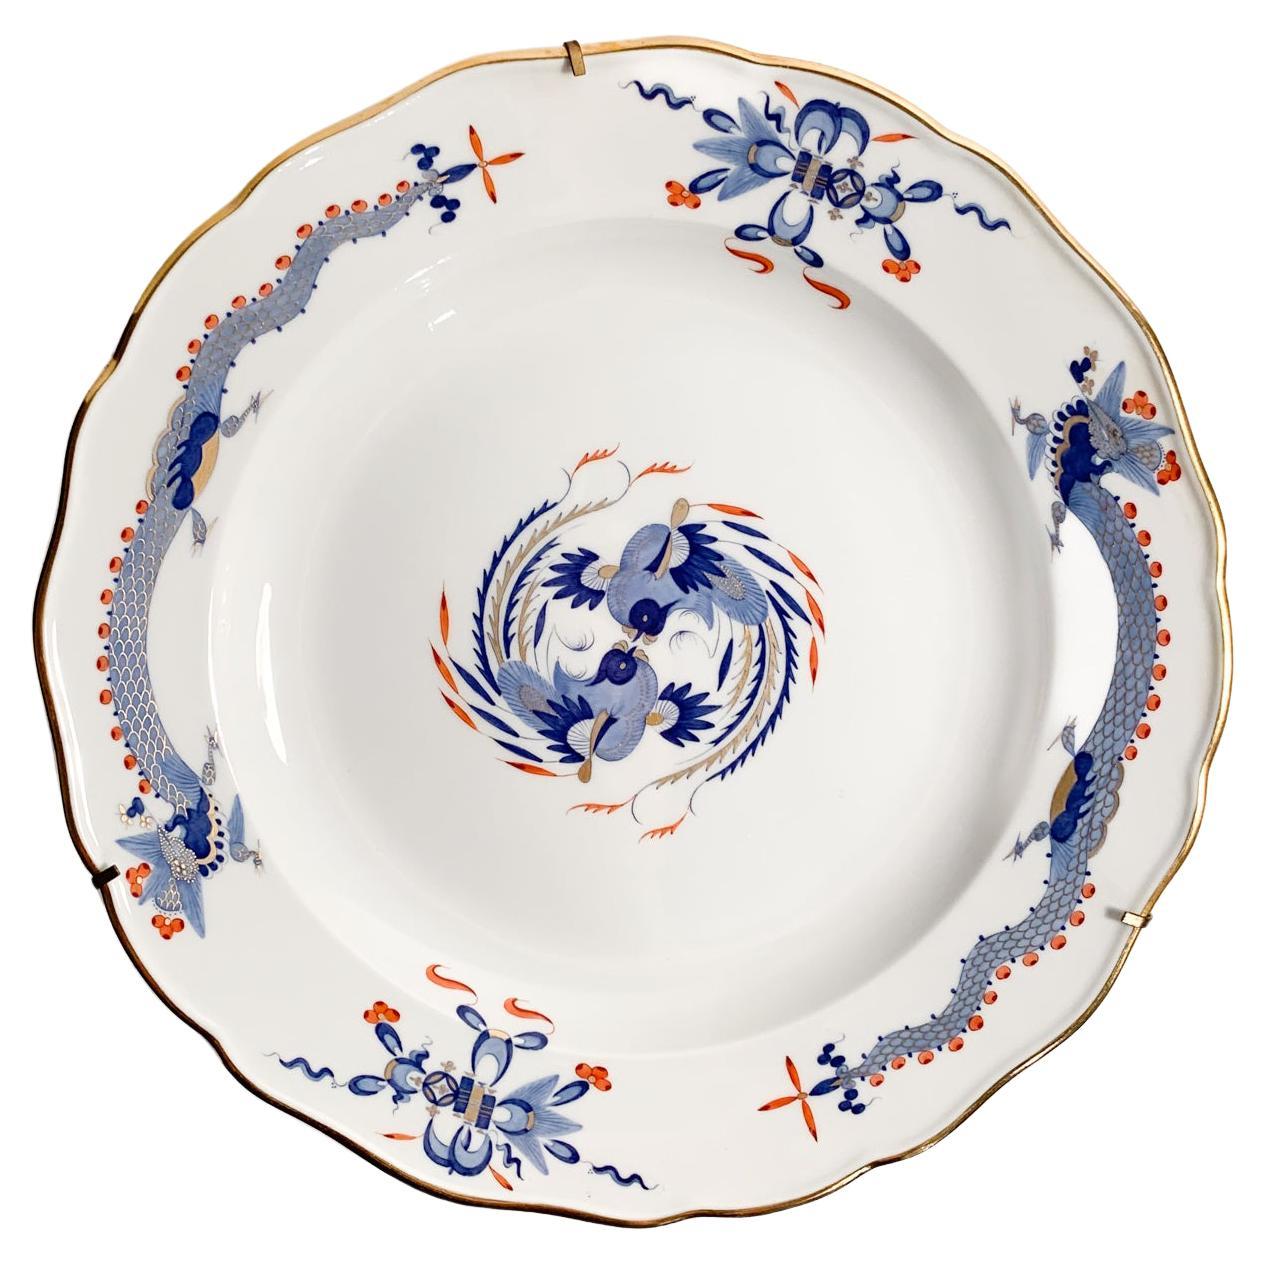 Meissen Porcelain Plate Blue Court Dragon Mark 1850-1925